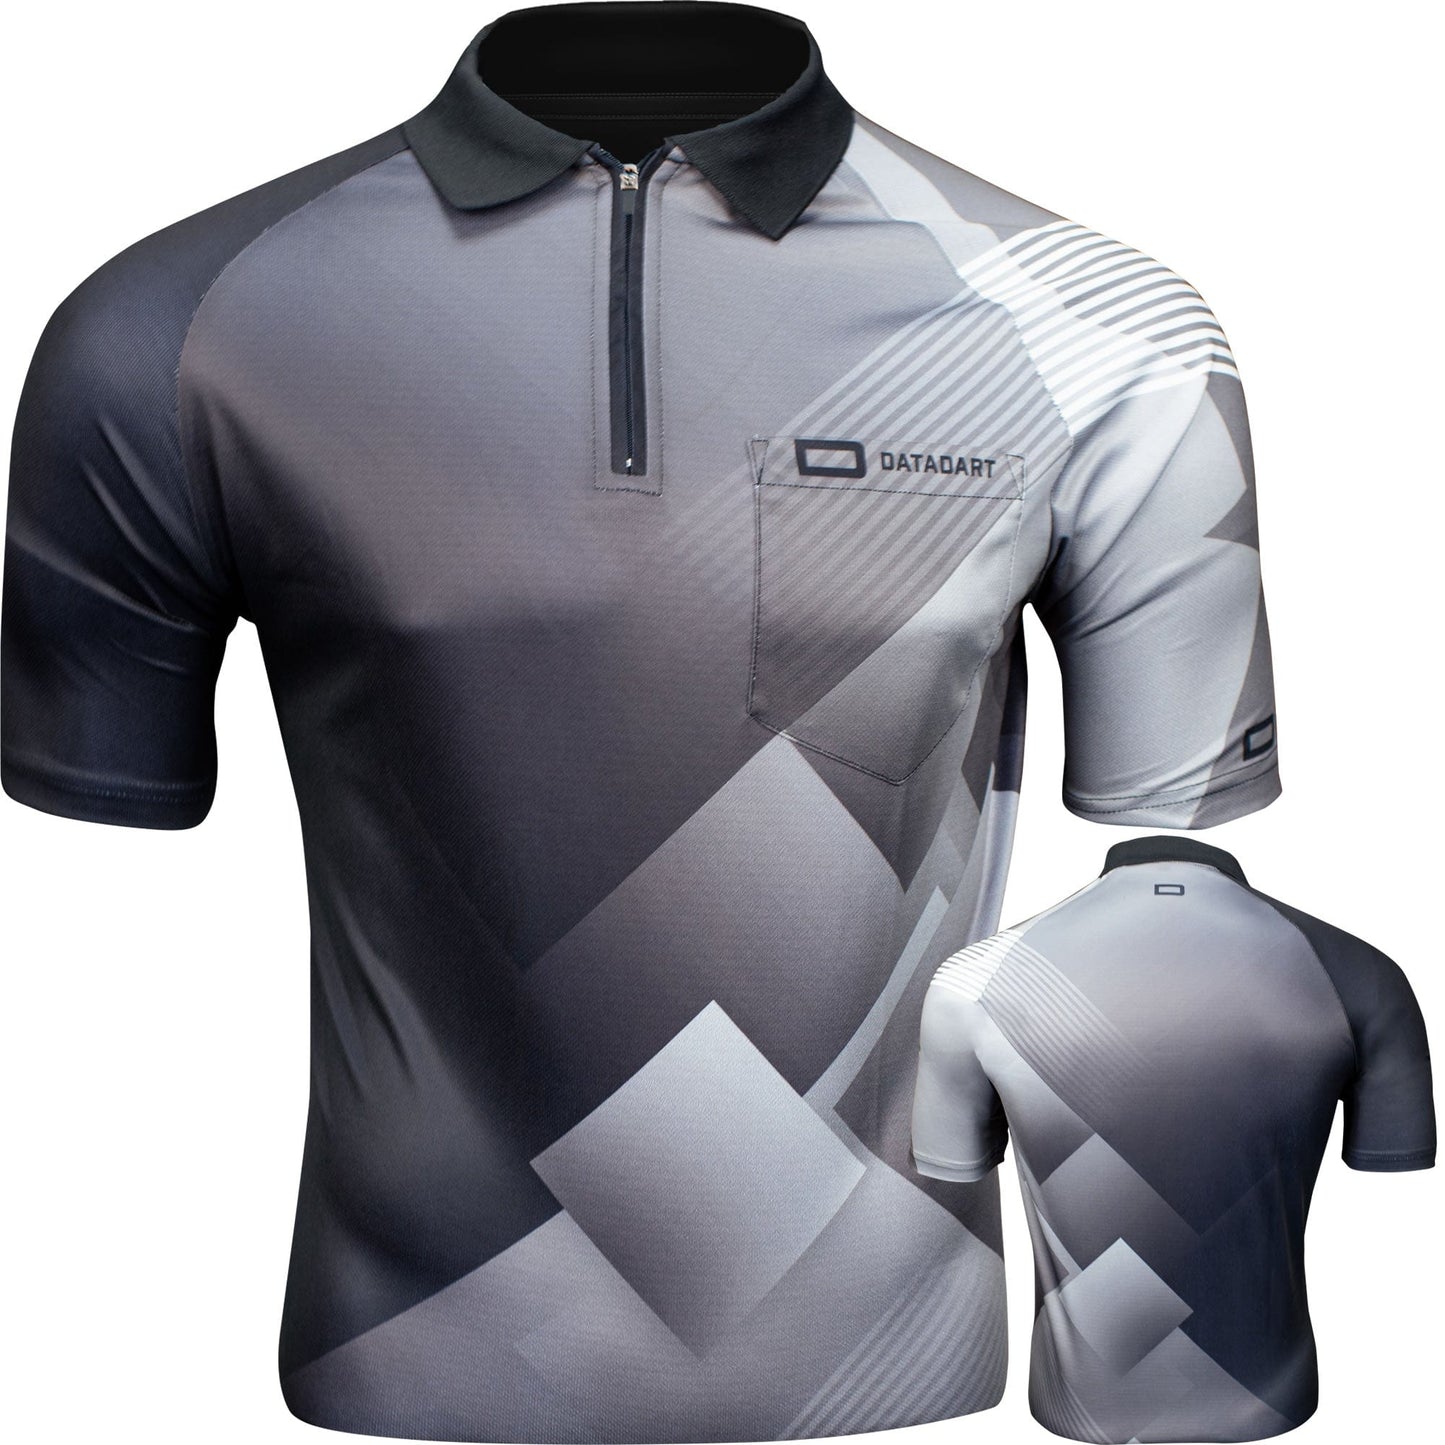 Datadart Vertex Dart Shirt - Comfort - Grey Small